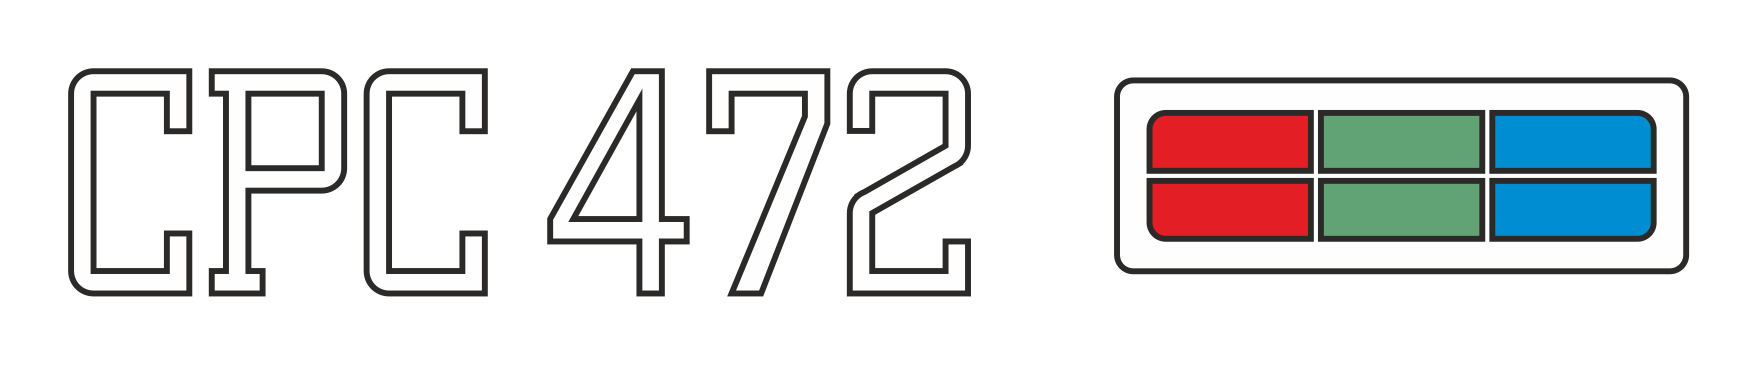 Amstrad CPC 472: logo